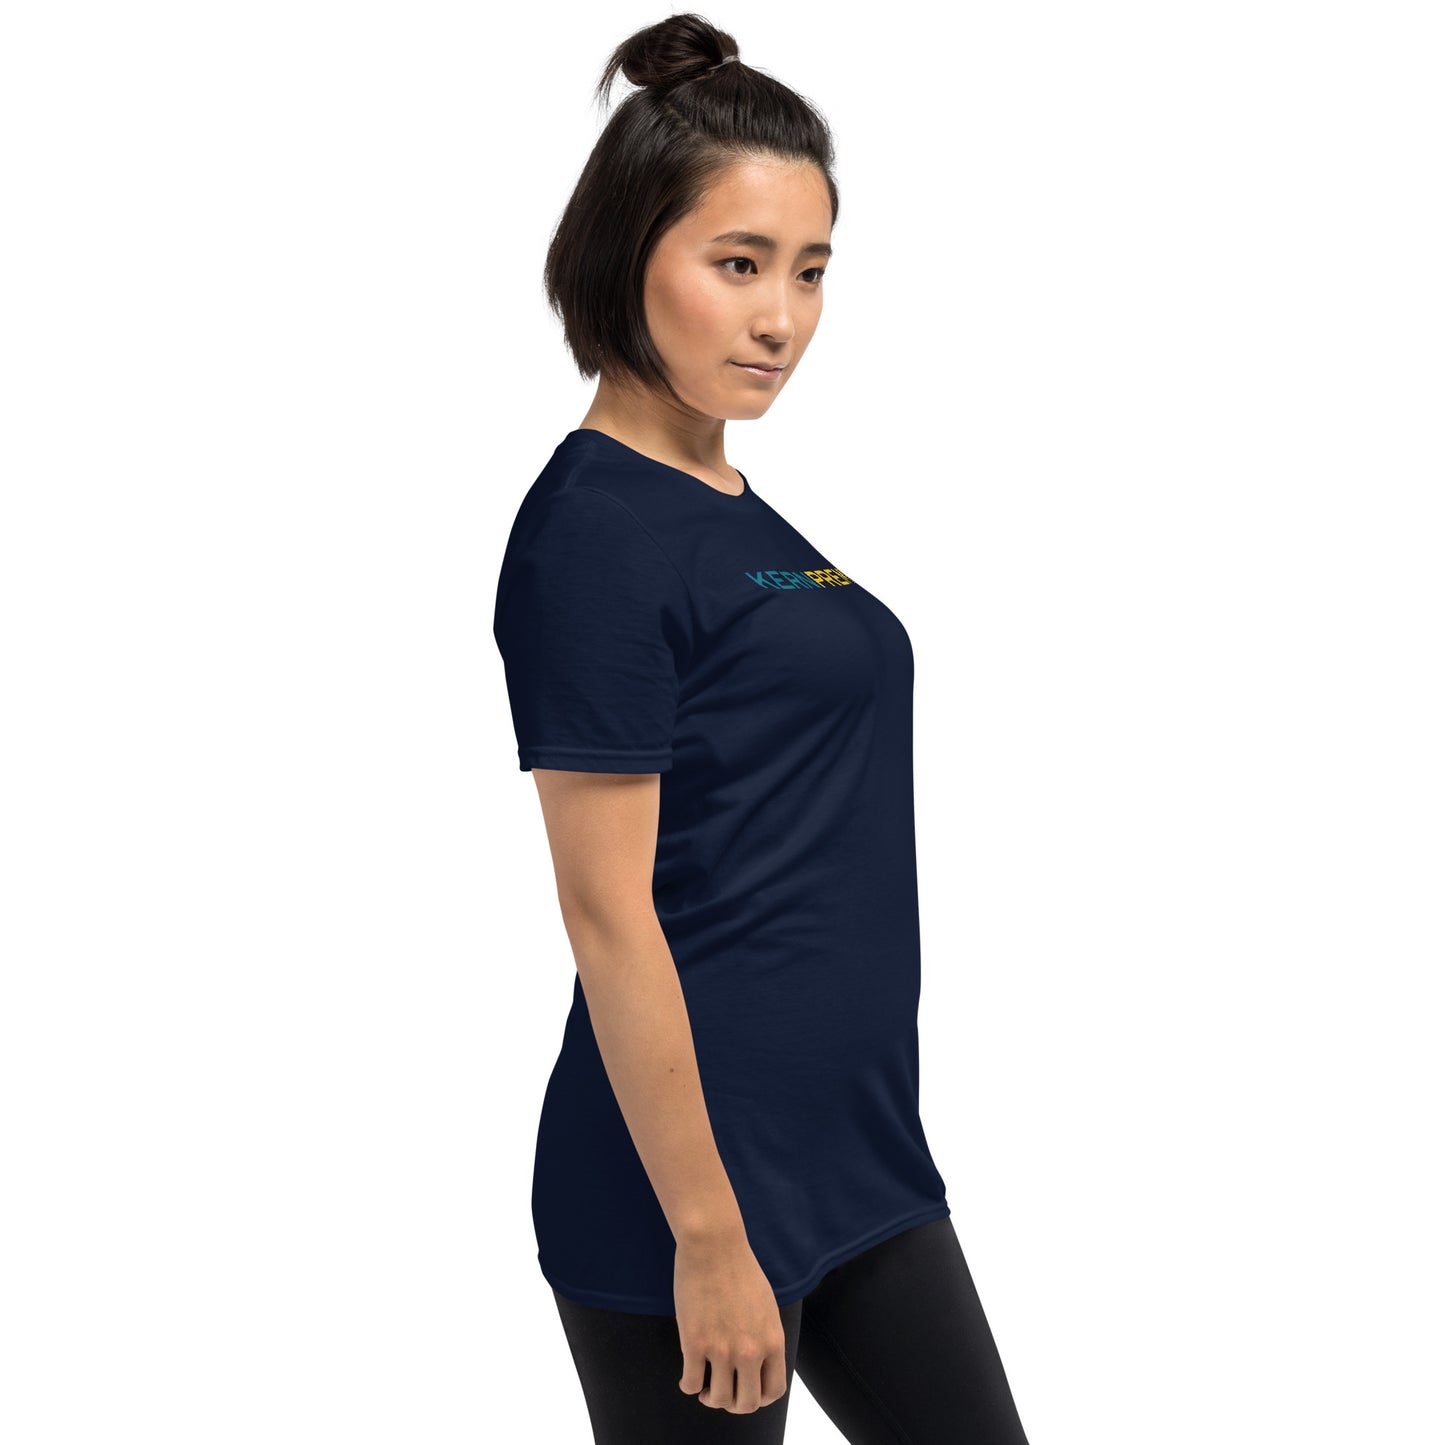 Kern Premier 18u girls JOs shirt Short-Sleeve Unisex T-Shirt